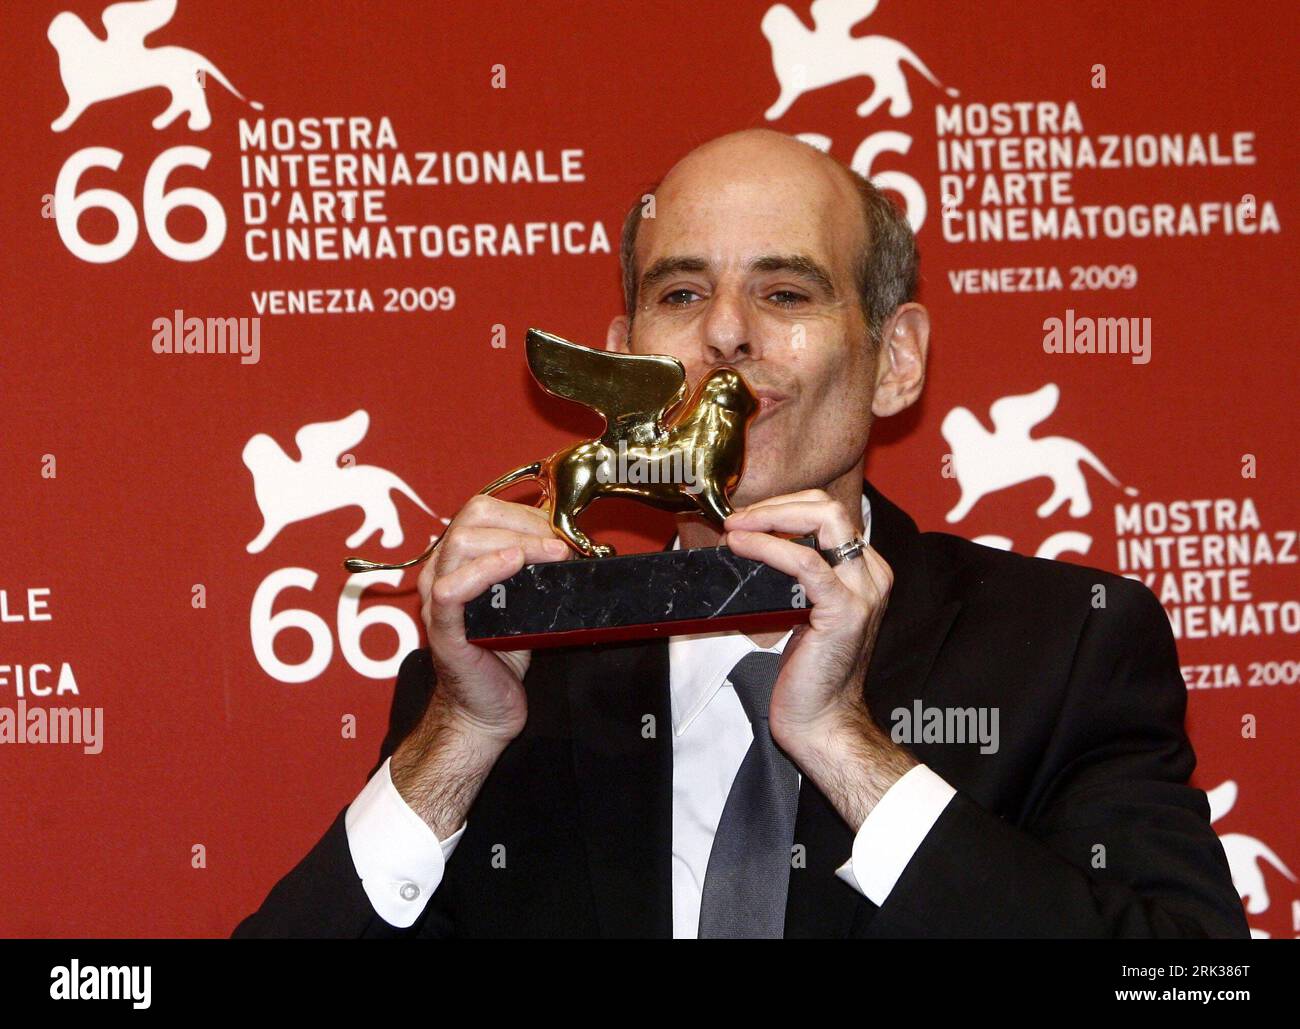 Bildnummer: 53351387 Datum: 12.09.2009 Copyright: imago/Xinhua (090913) -- VENEDIG, 13. September 2009 (Xinhua) -- Samuel Maoz, Regisseur des Films Libanon küsst den Preis des Goldenen Löwen für den besten Film während des 66. Internationalen Filmfestivals in Venedig Lido am 12. September 2009. (Xinhua) (hdt) (1)ITALIEN-VENEDIG-FILMFESTIVAL-LIBANON PUBLICATIONxNOTxINxCHN People Film Filmfestival Venedig o00 Biennale o00 Pressetermin Sieger Preisverleihung Trophäe premiumd kbdig xng 2009 quer o0 Preis Kuss o00 Preisträger Goldener Löwe o00 Porträt Bildnummer 53351387 Datum 12 09 2009 Copyrig Stockfoto